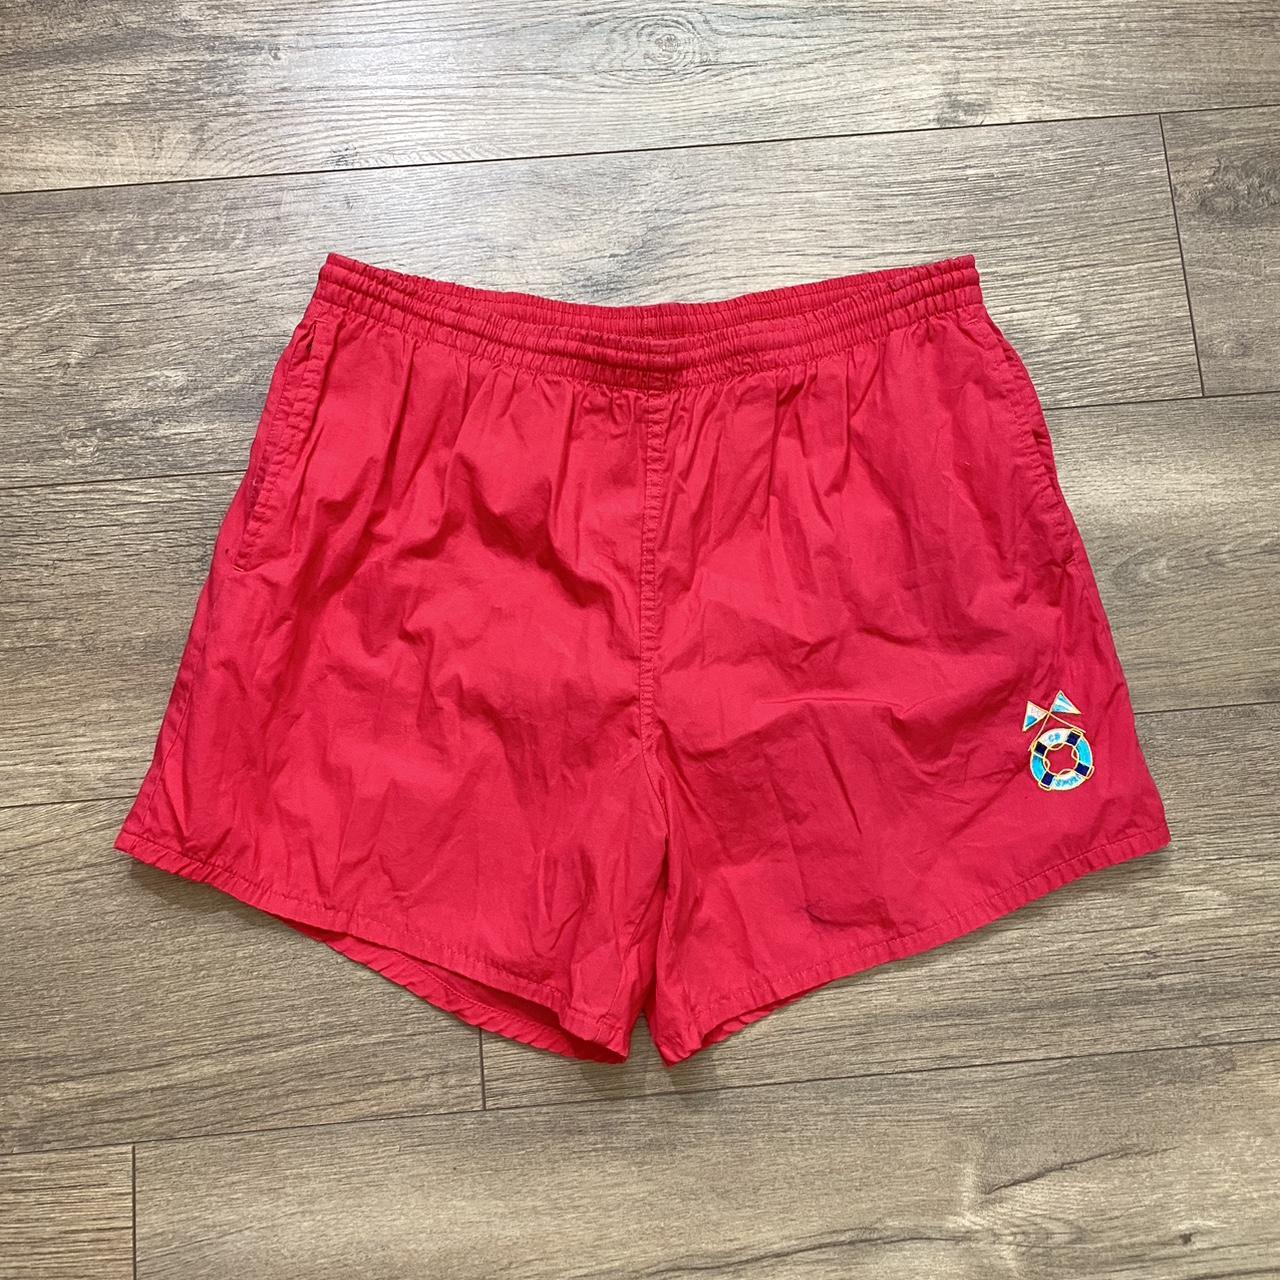 Christian Dior Men's Shorts - Red - L